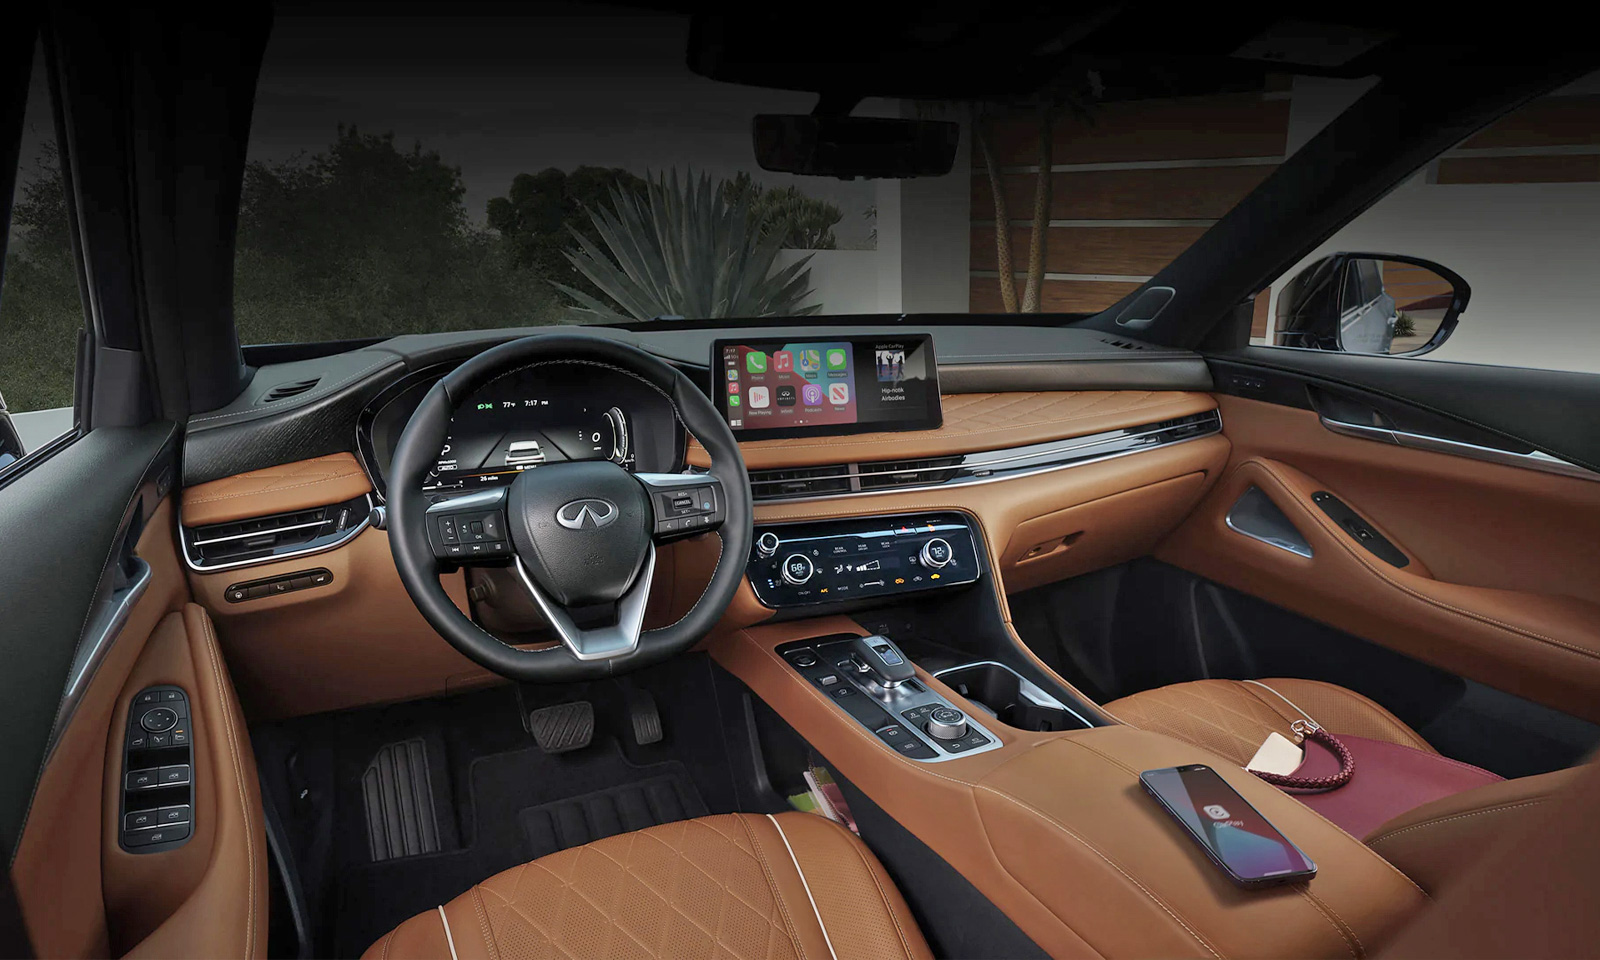 The 2022 Infiniti QX60 SUV luxury interior